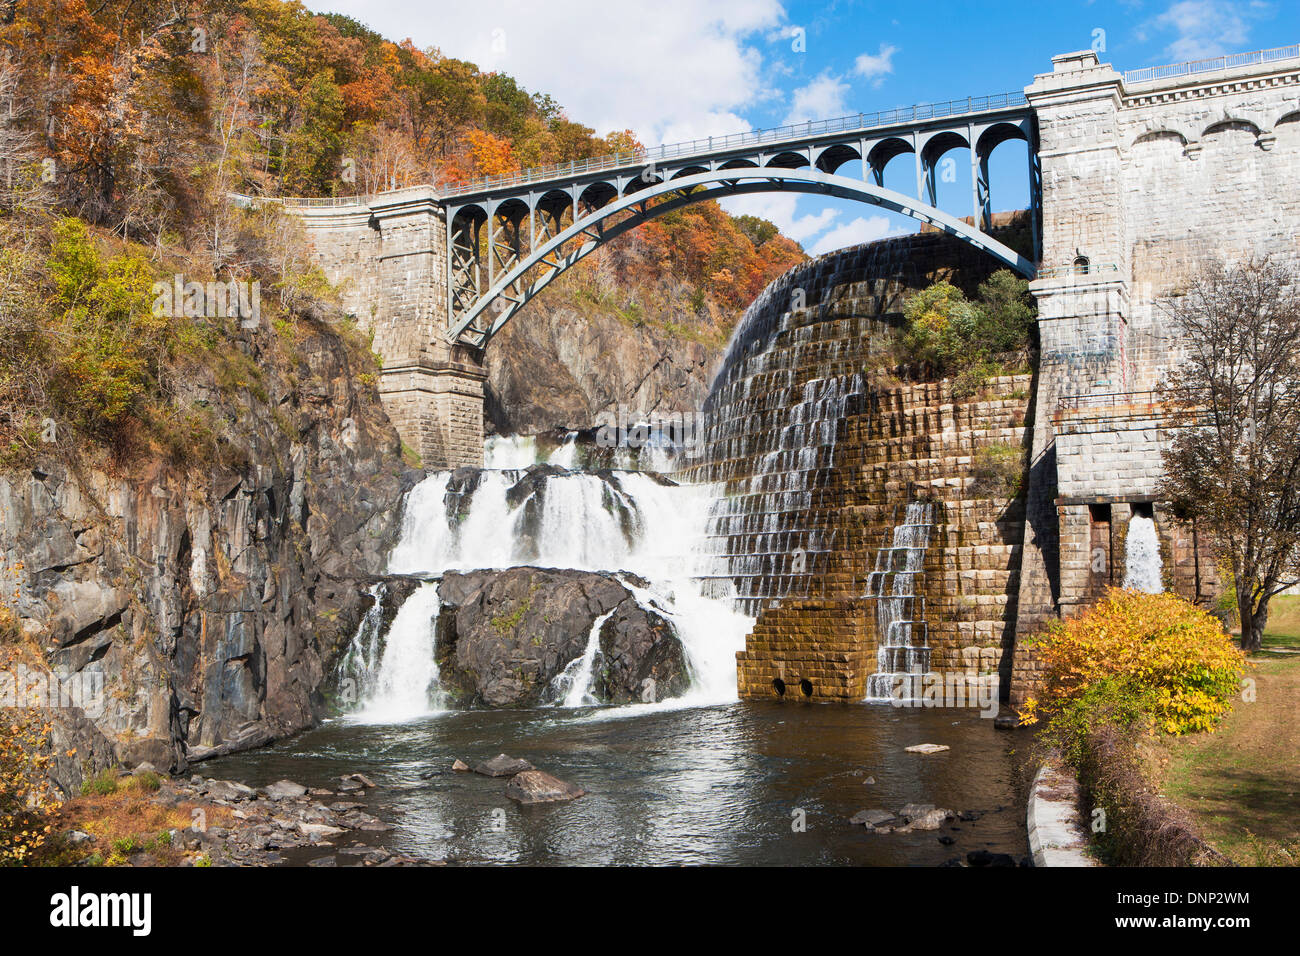 USA, New York State, Croton on Hudson, Dam and bridge Stock Photo